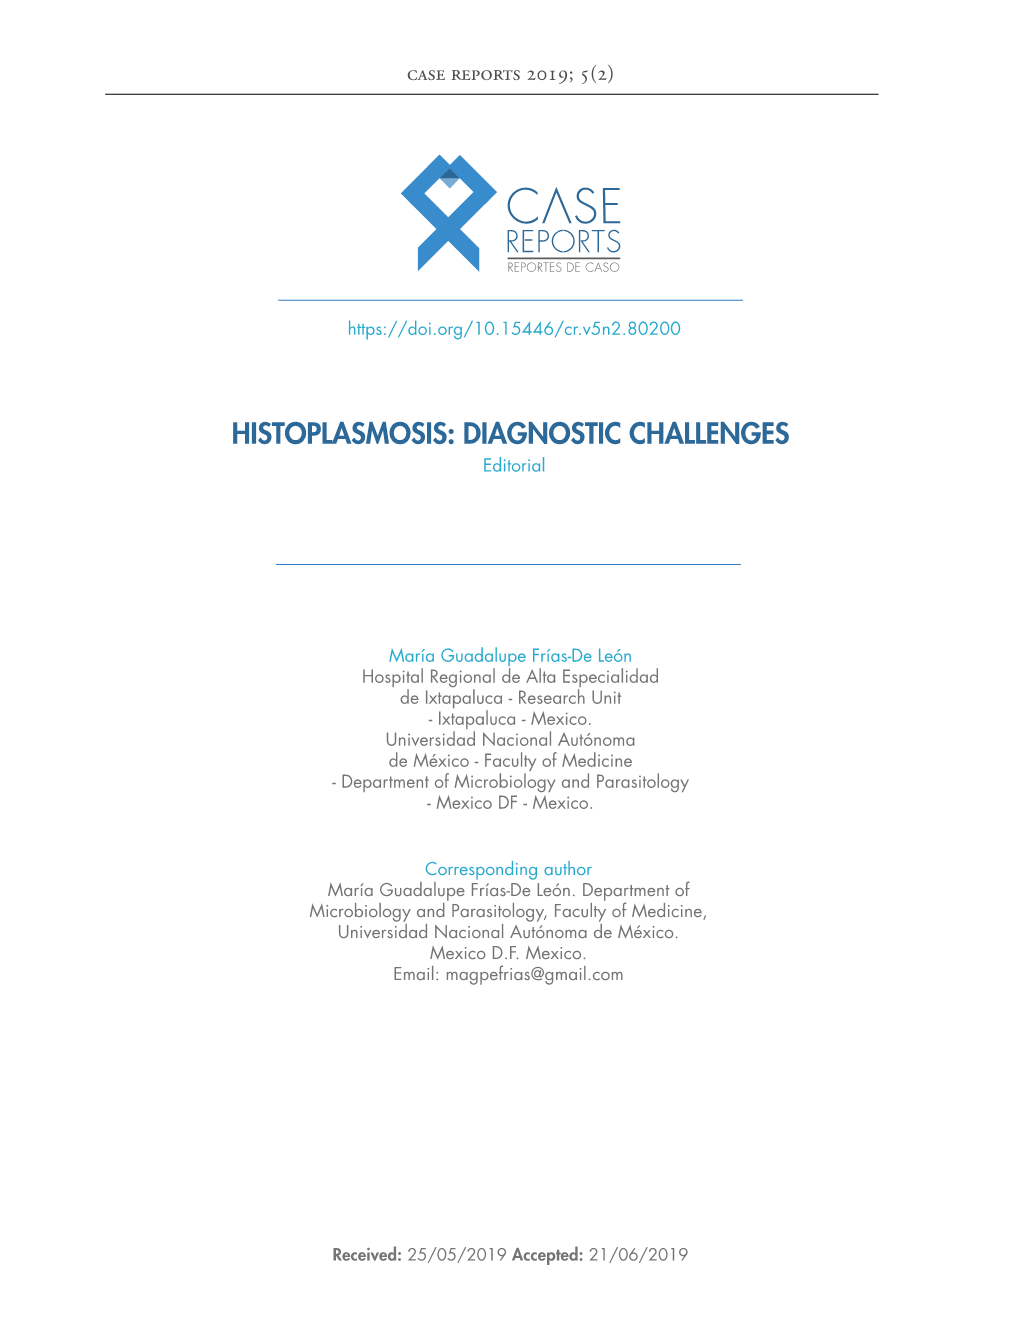 HISTOPLASMOSIS: DIAGNOSTIC CHALLENGES Editorial